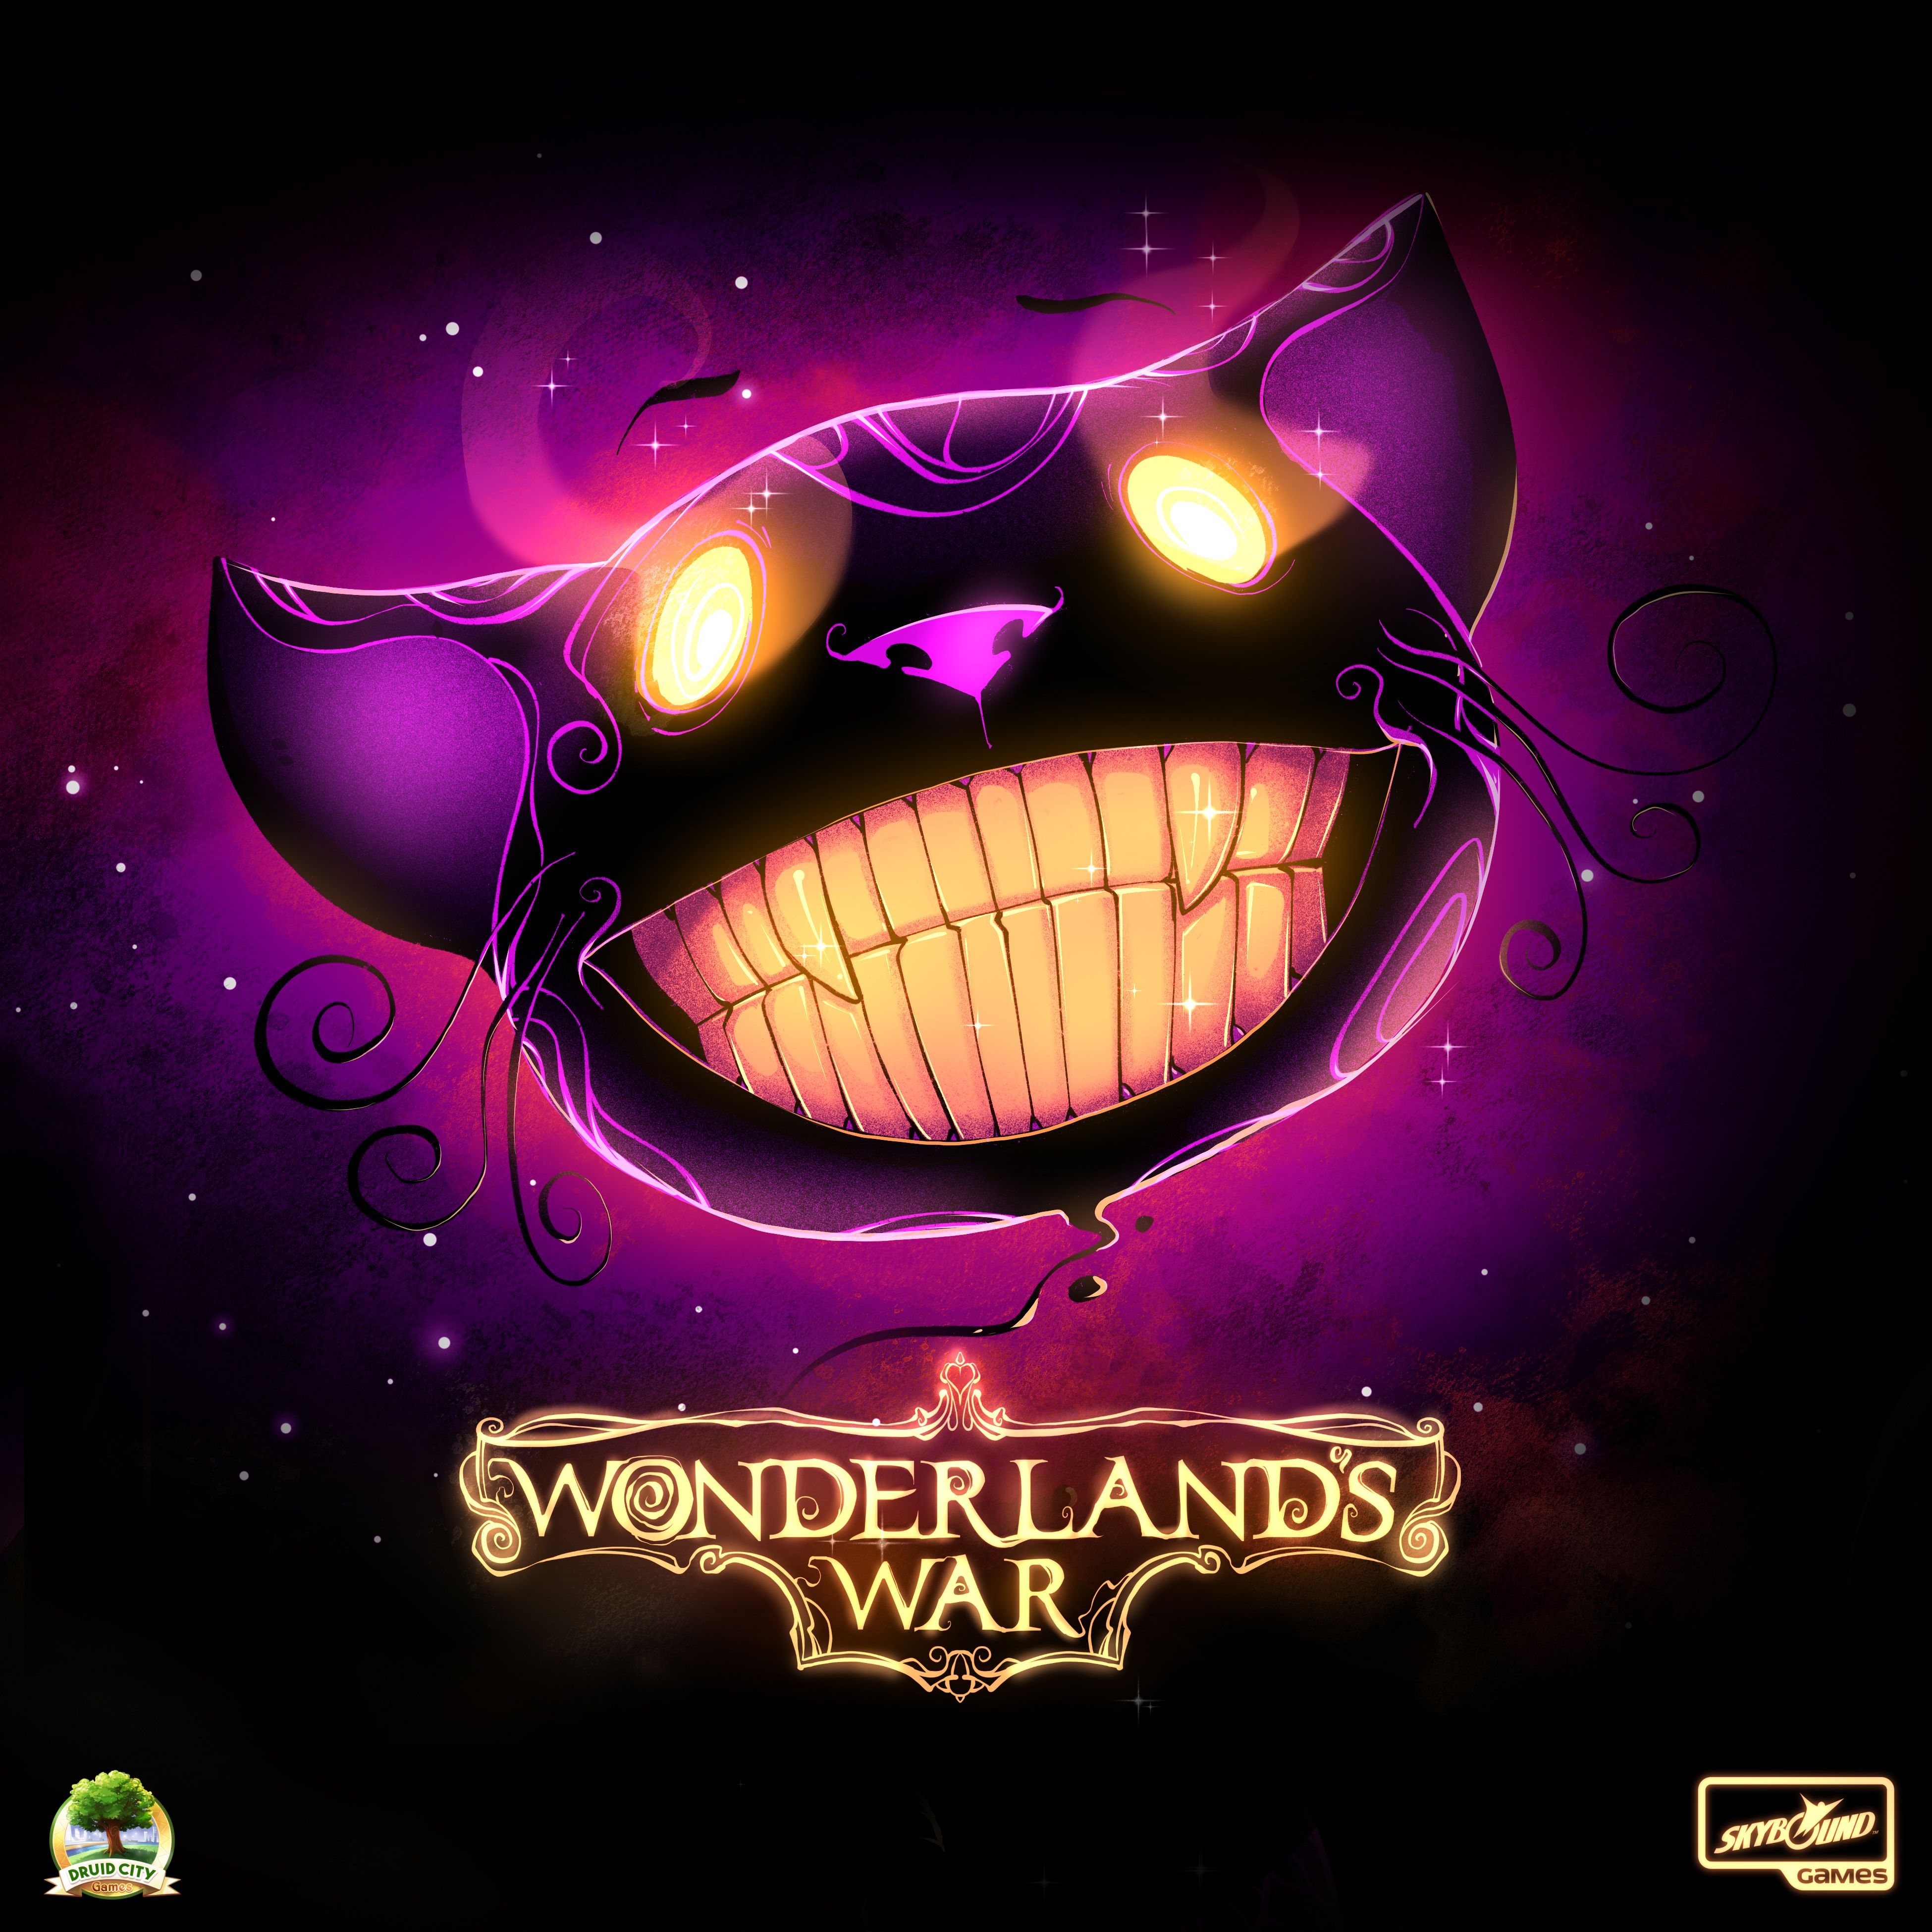 Wonderland's War | Tabernacle Games